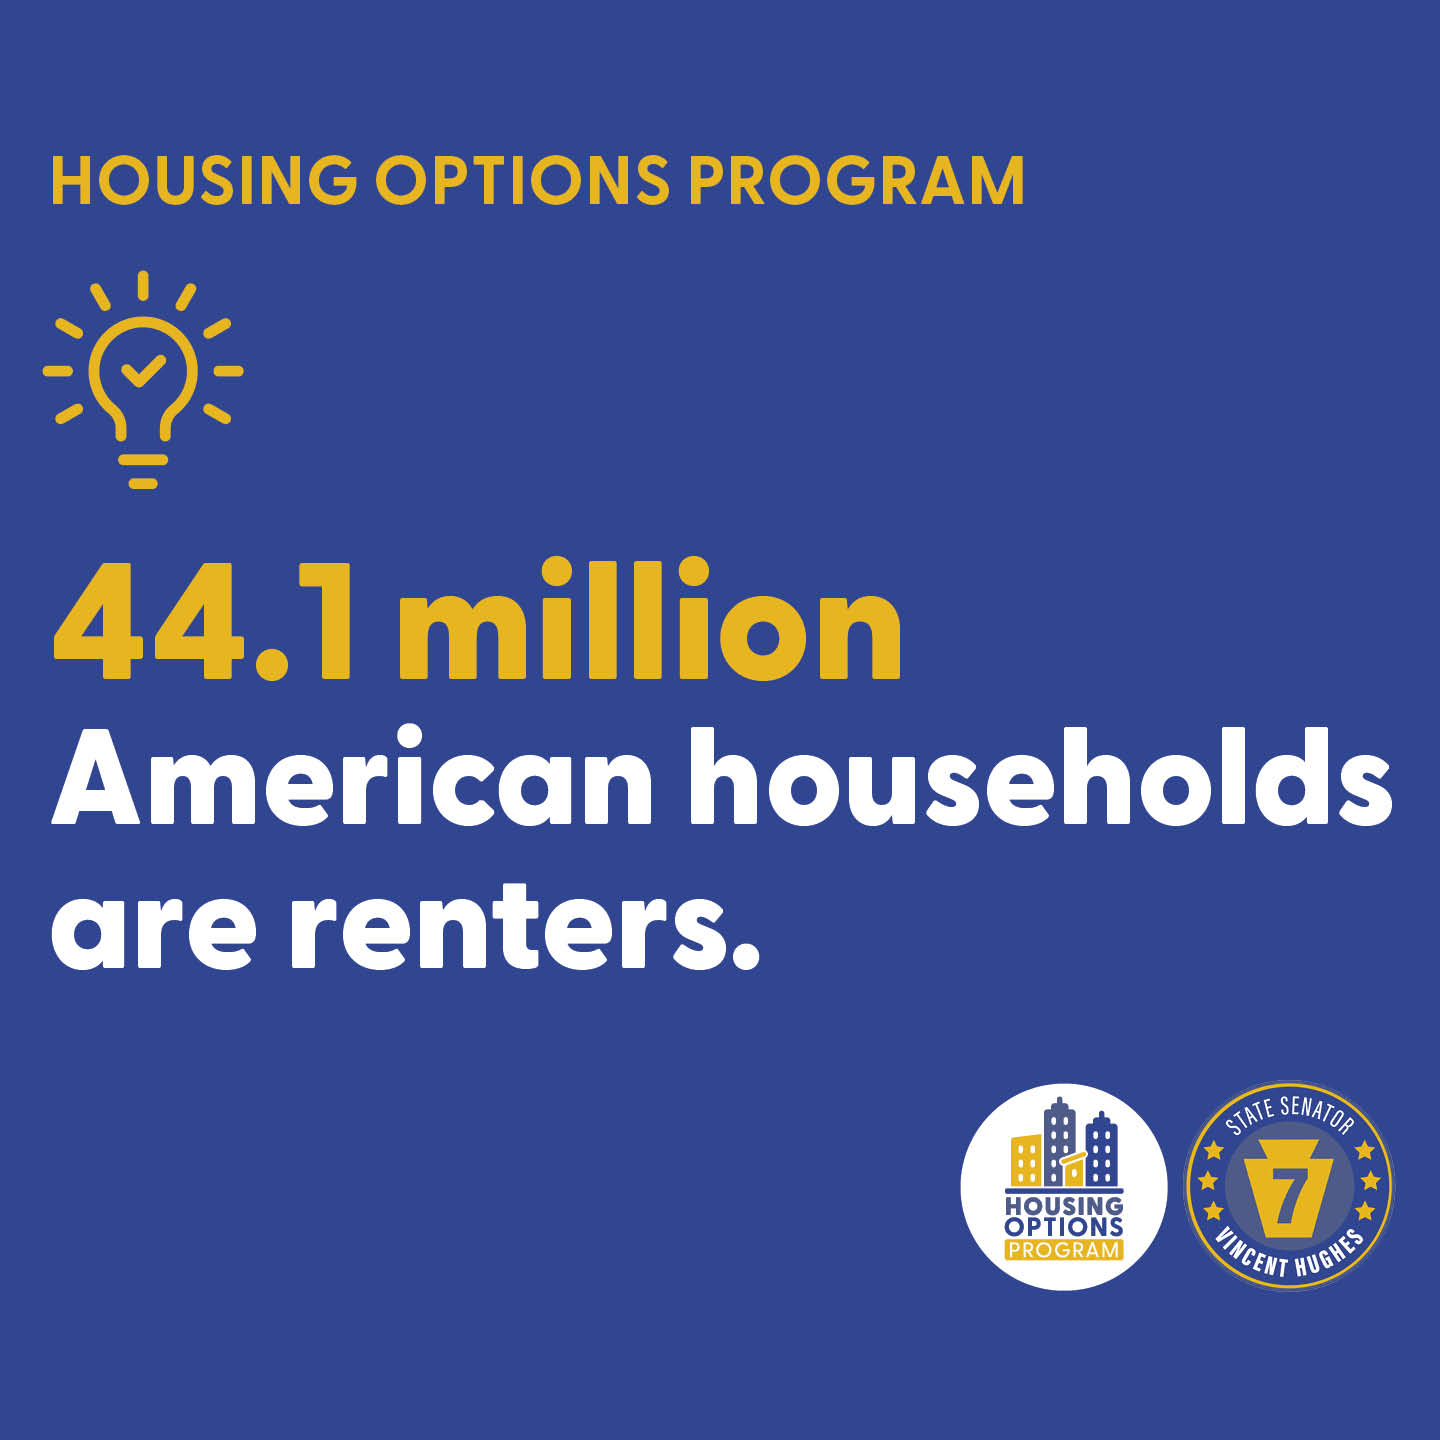 HOUSING OPTIONS PROGRAM - 44.1 million American households are renters.